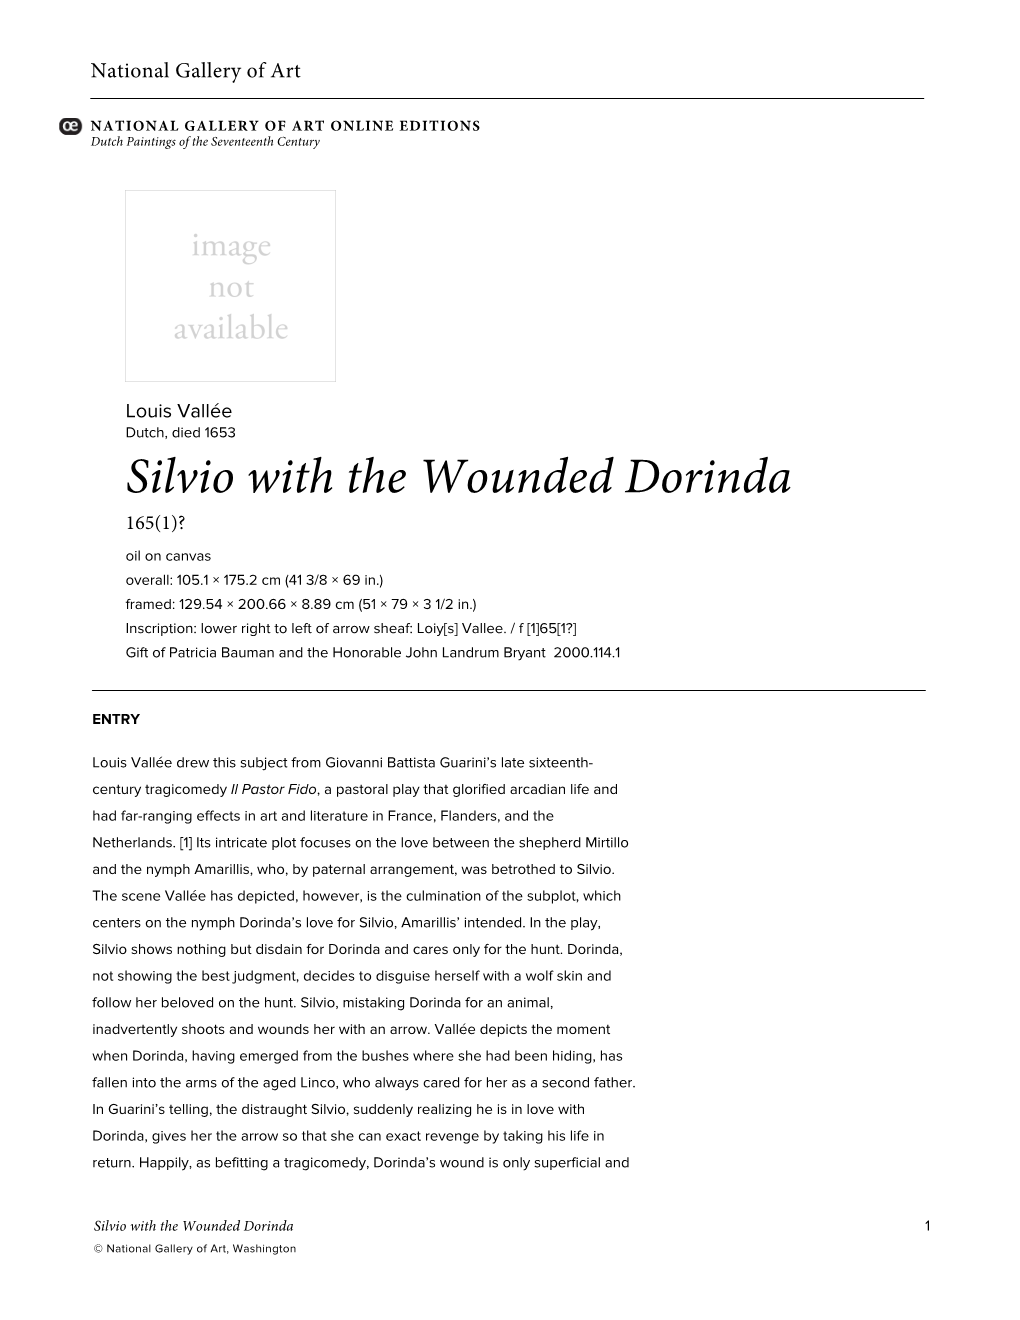 Silvio with the Wounded Dorinda